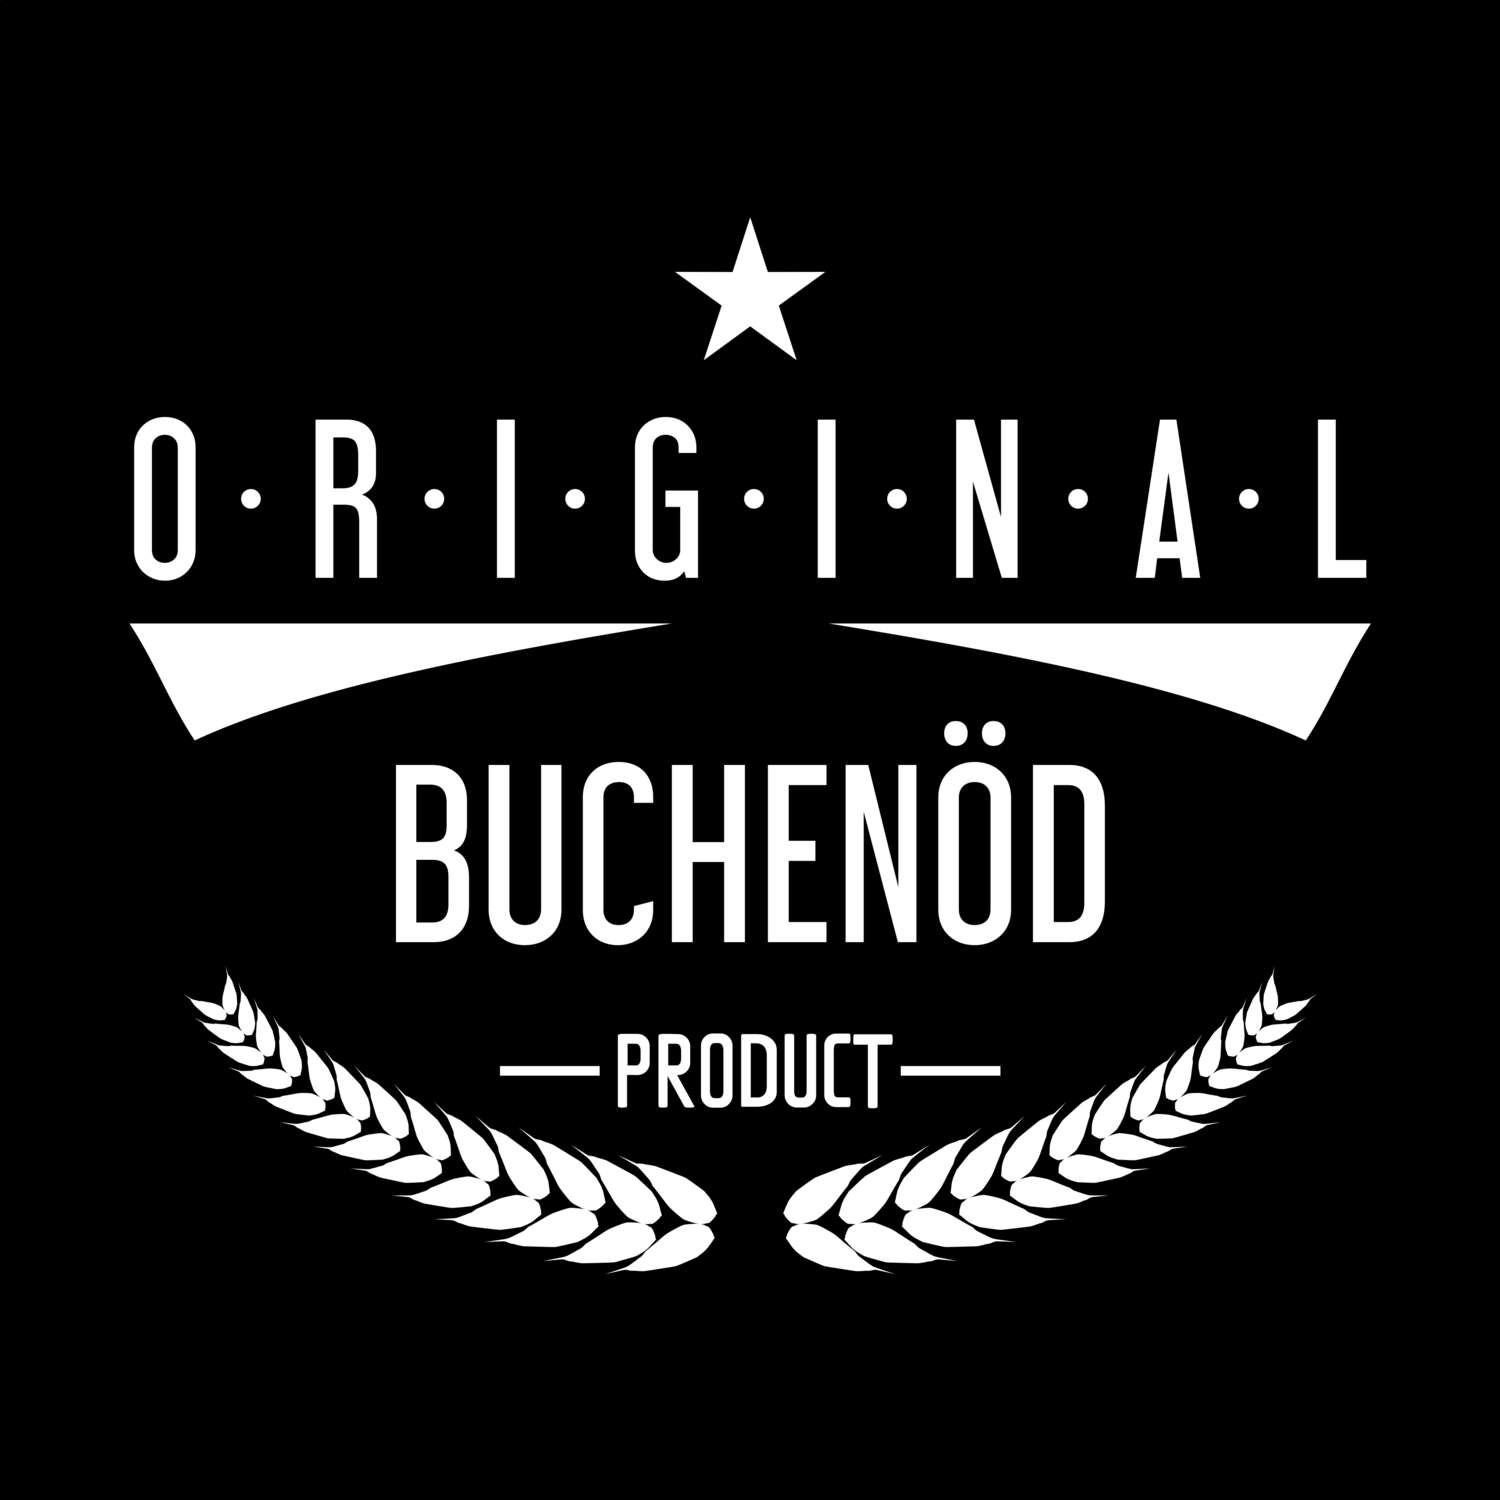 Buchenöd T-Shirt »Original Product«